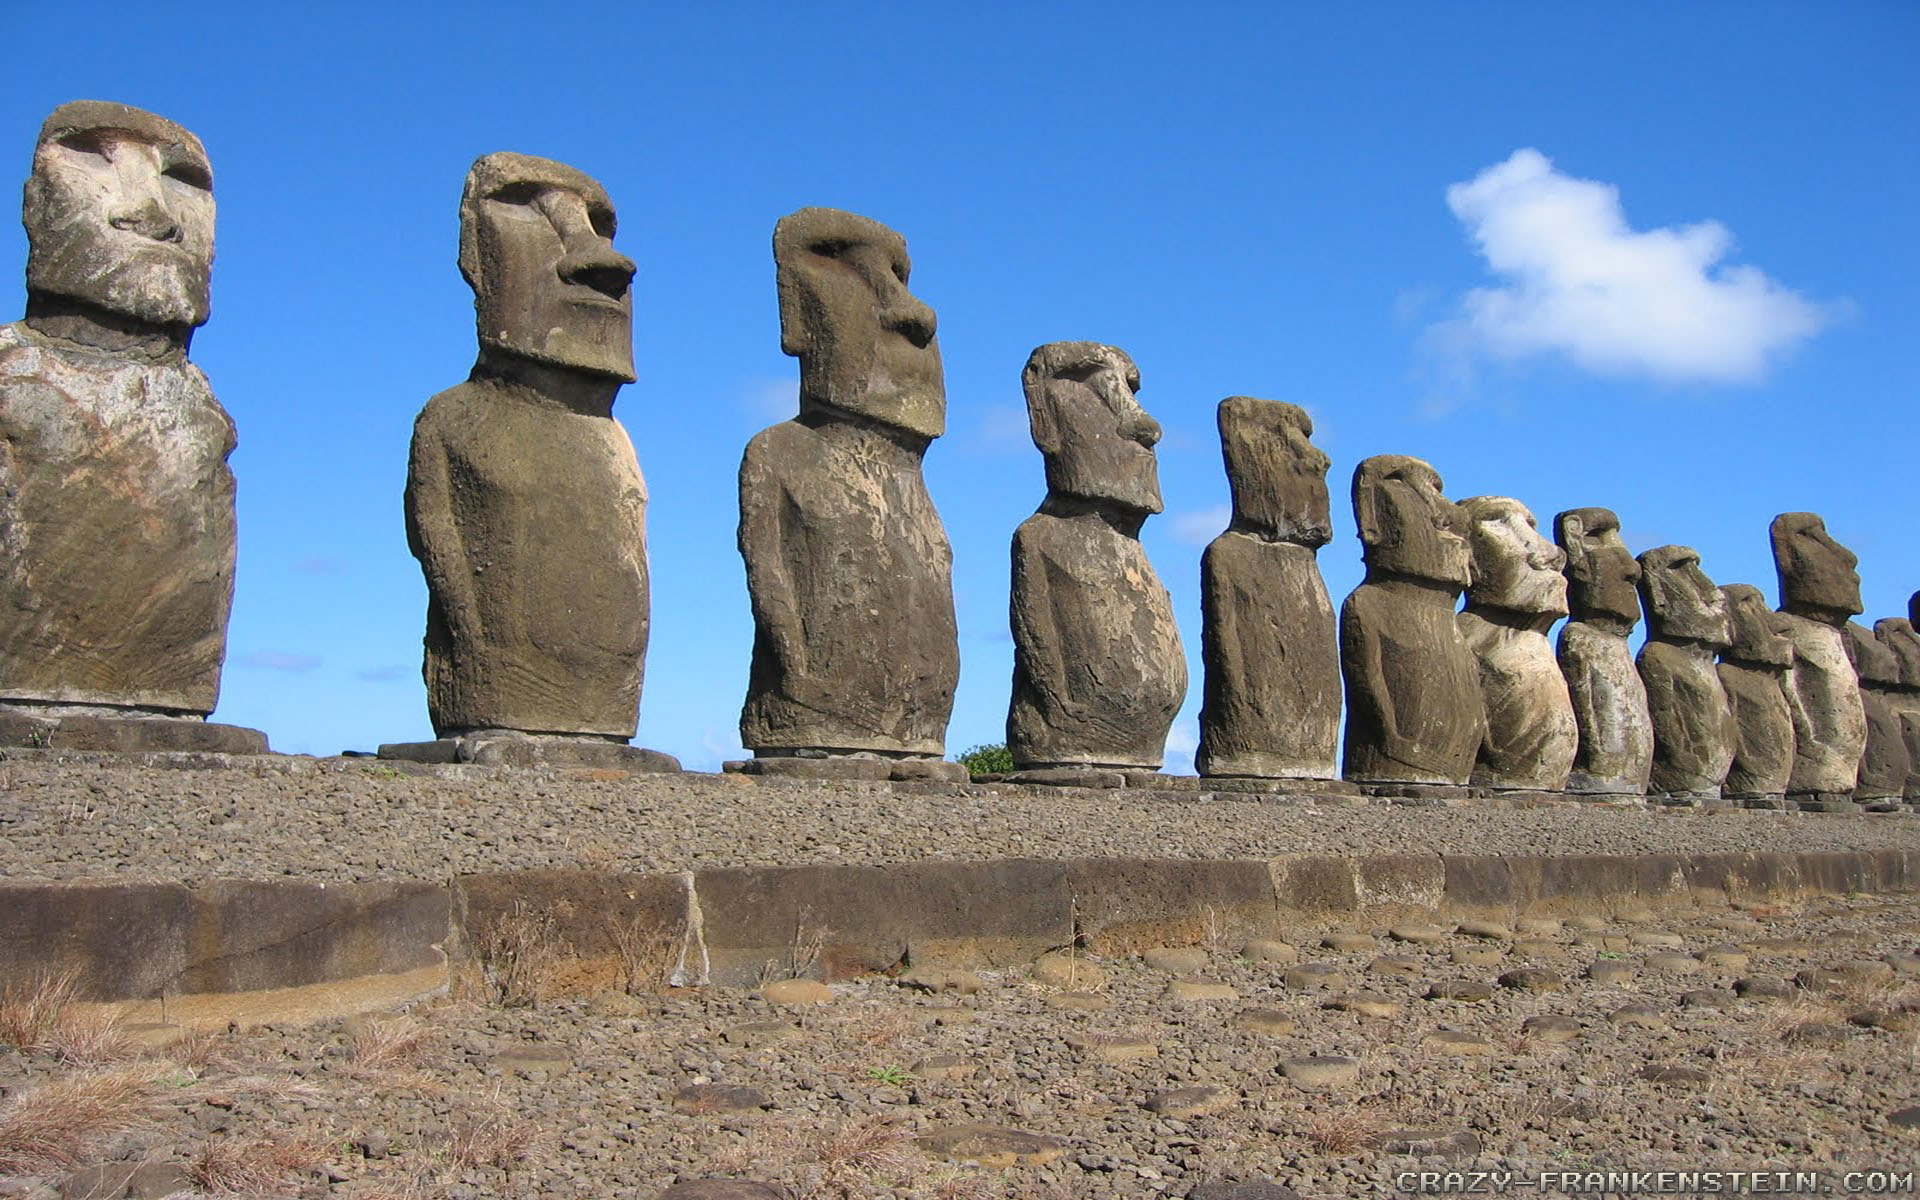  Easter Island   Moai Statues Easter Island 03   Alafoto Wallpapers 1920x1200